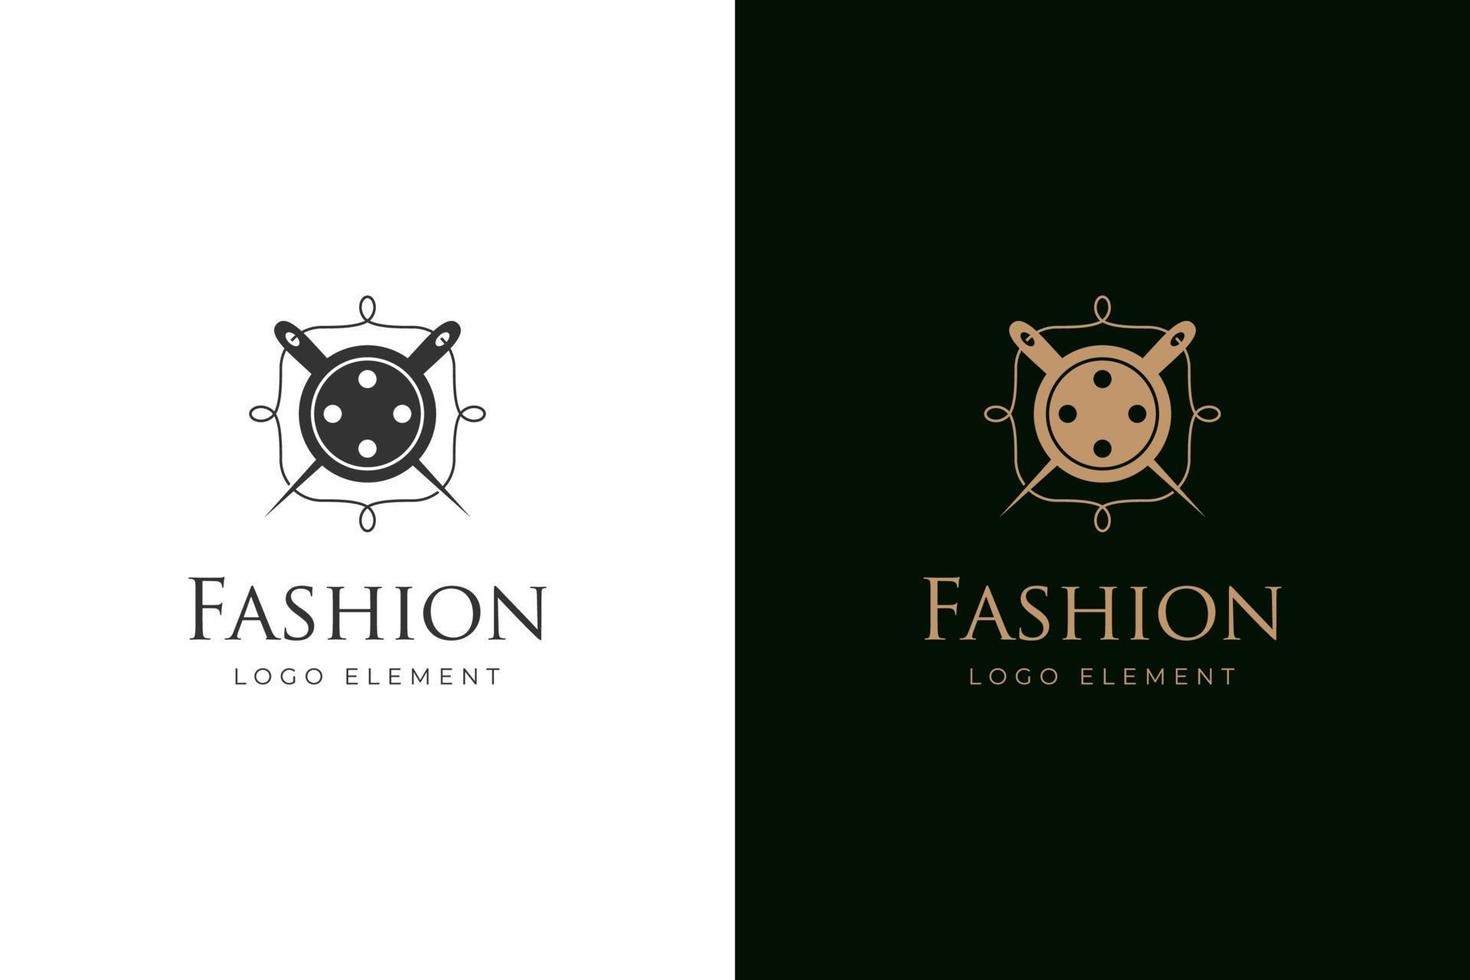 elegant minimalist tailor shop fashion logo design with sewing needle vector element